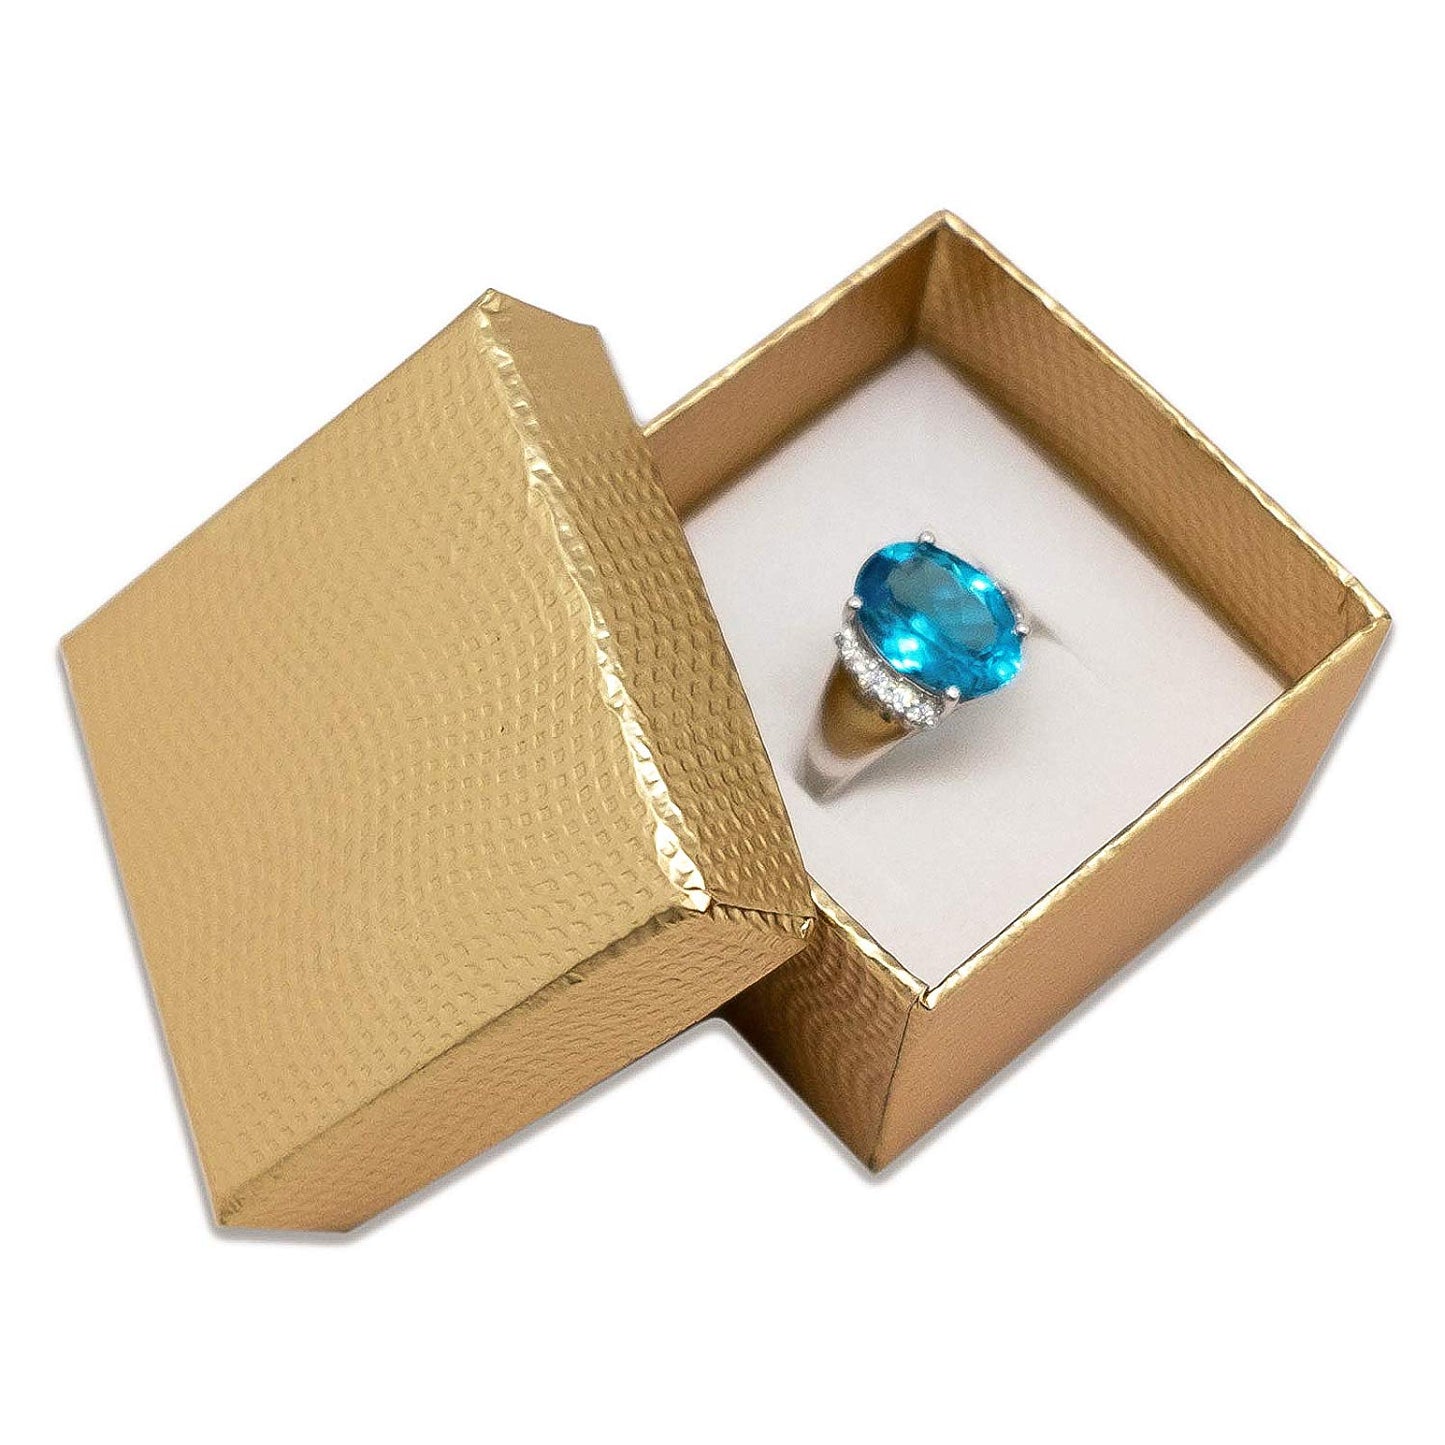 1 3/4" x 1 3/4" Gold Cardboard Jewelry Box with White Velvet Insert